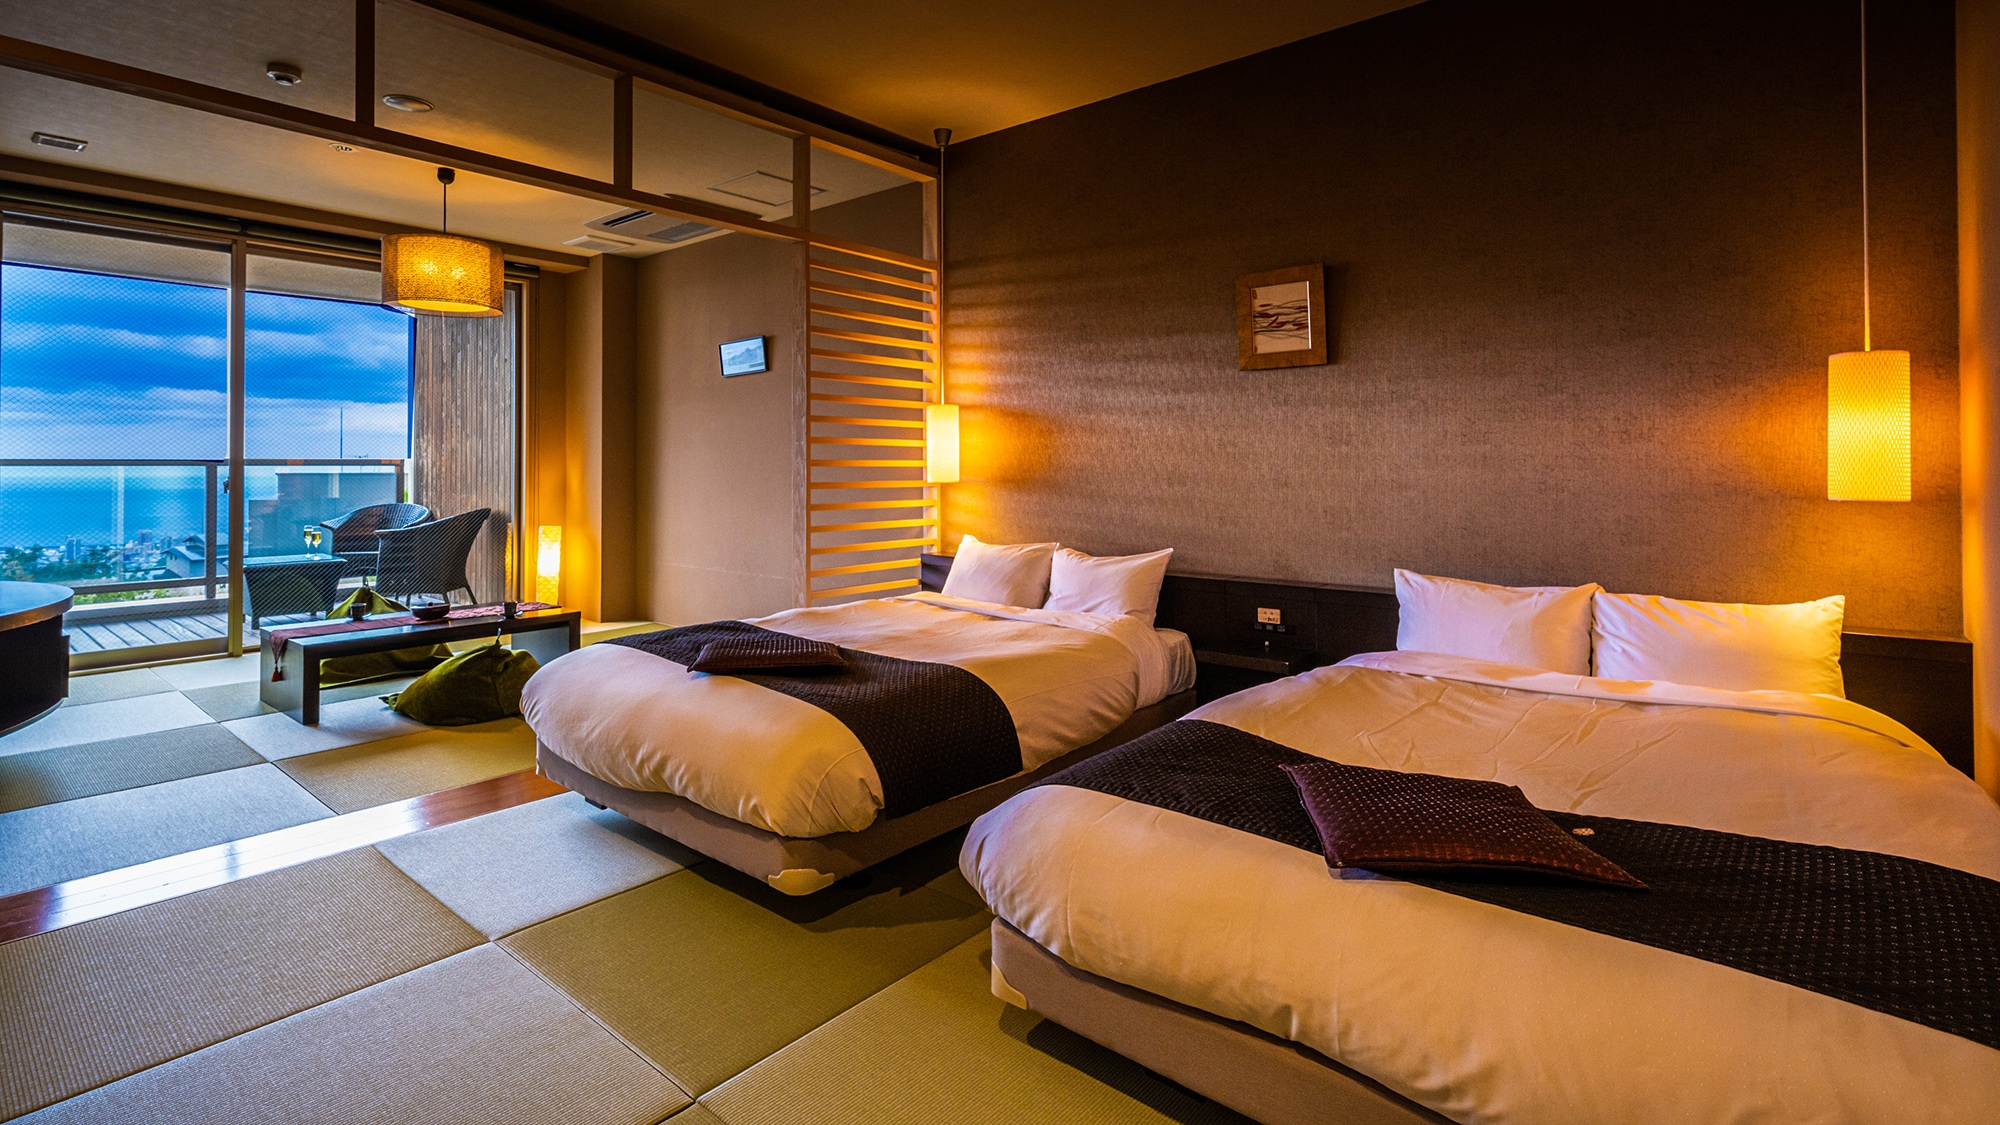 ◆ Tsukinosou ◇ Japanese Modern "Wakana" ◆ Japanese-Western style room with a private open-air bath